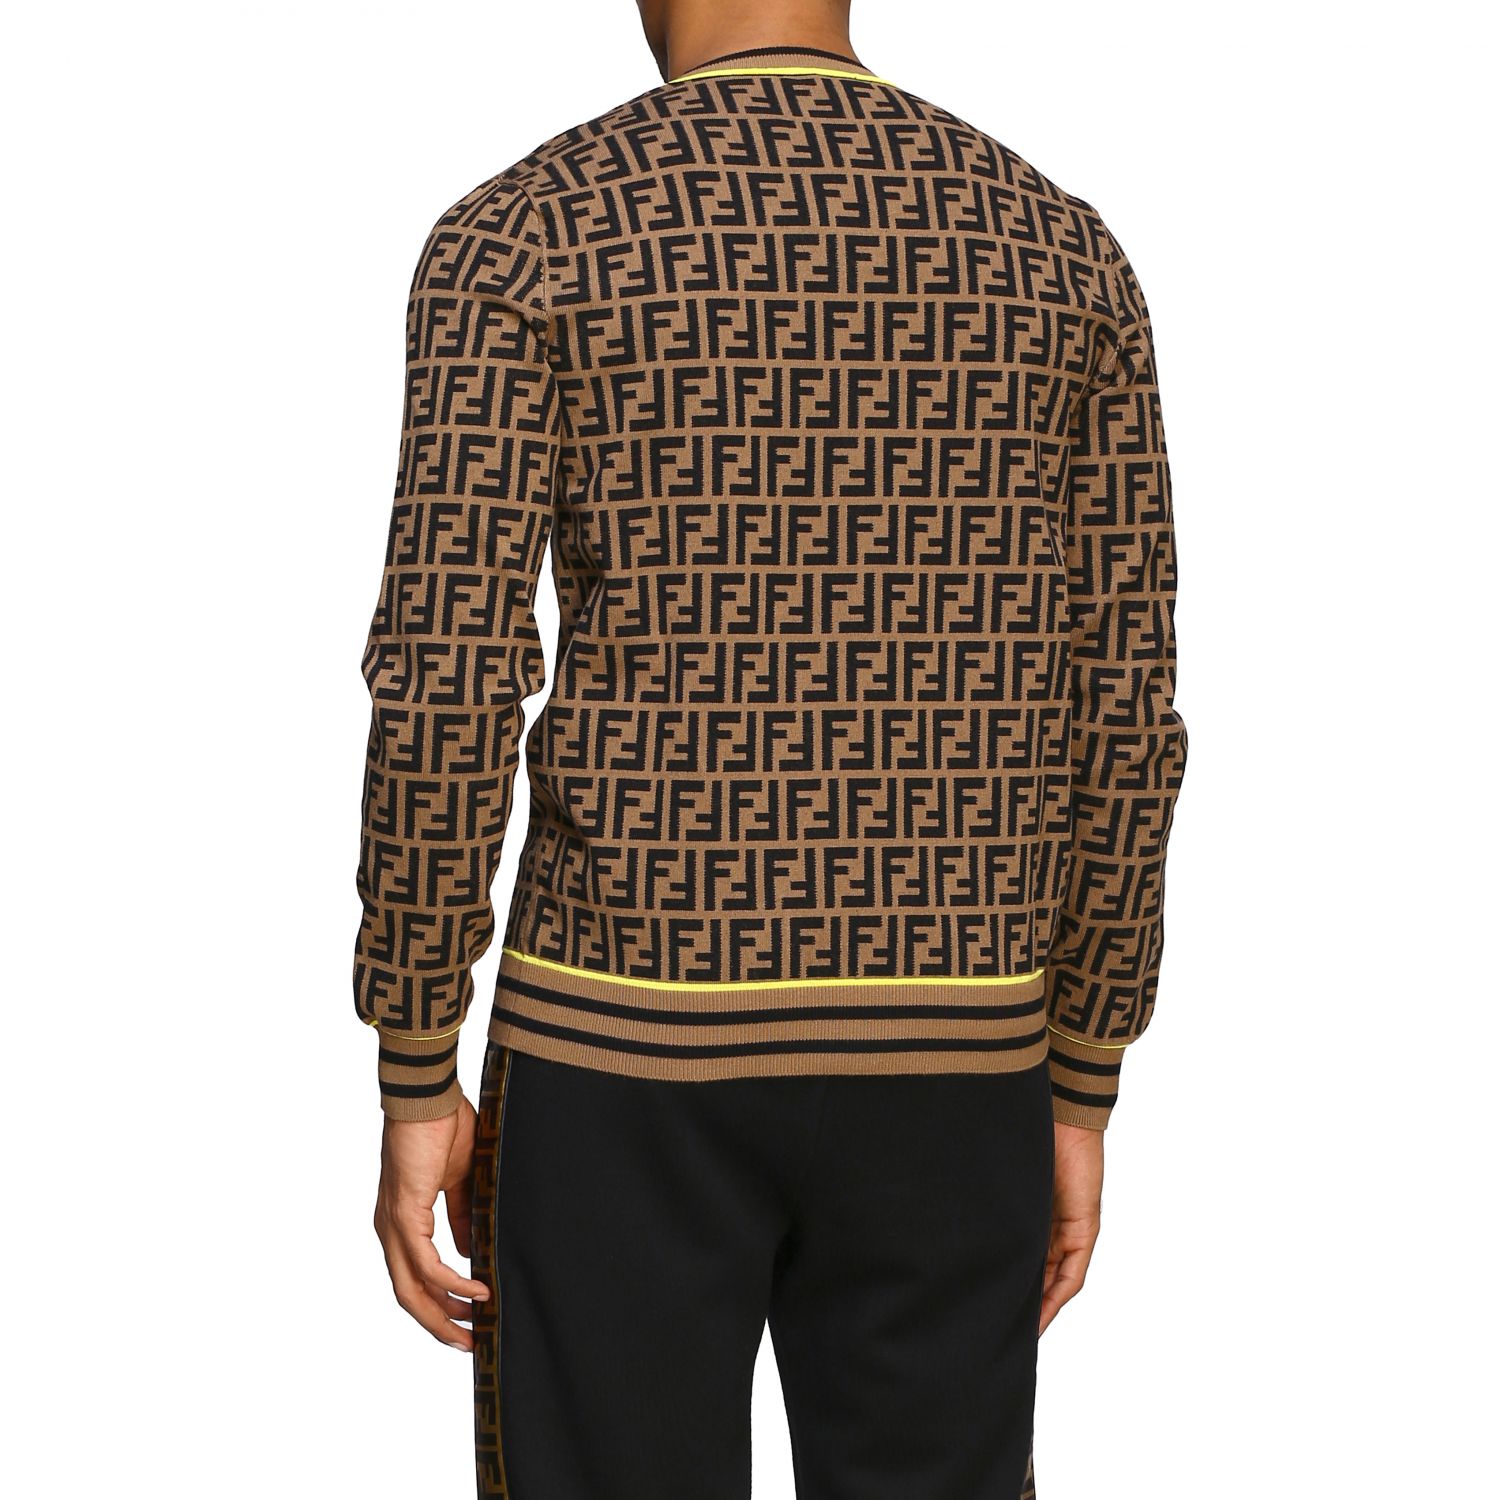 fendi logo sweater mens